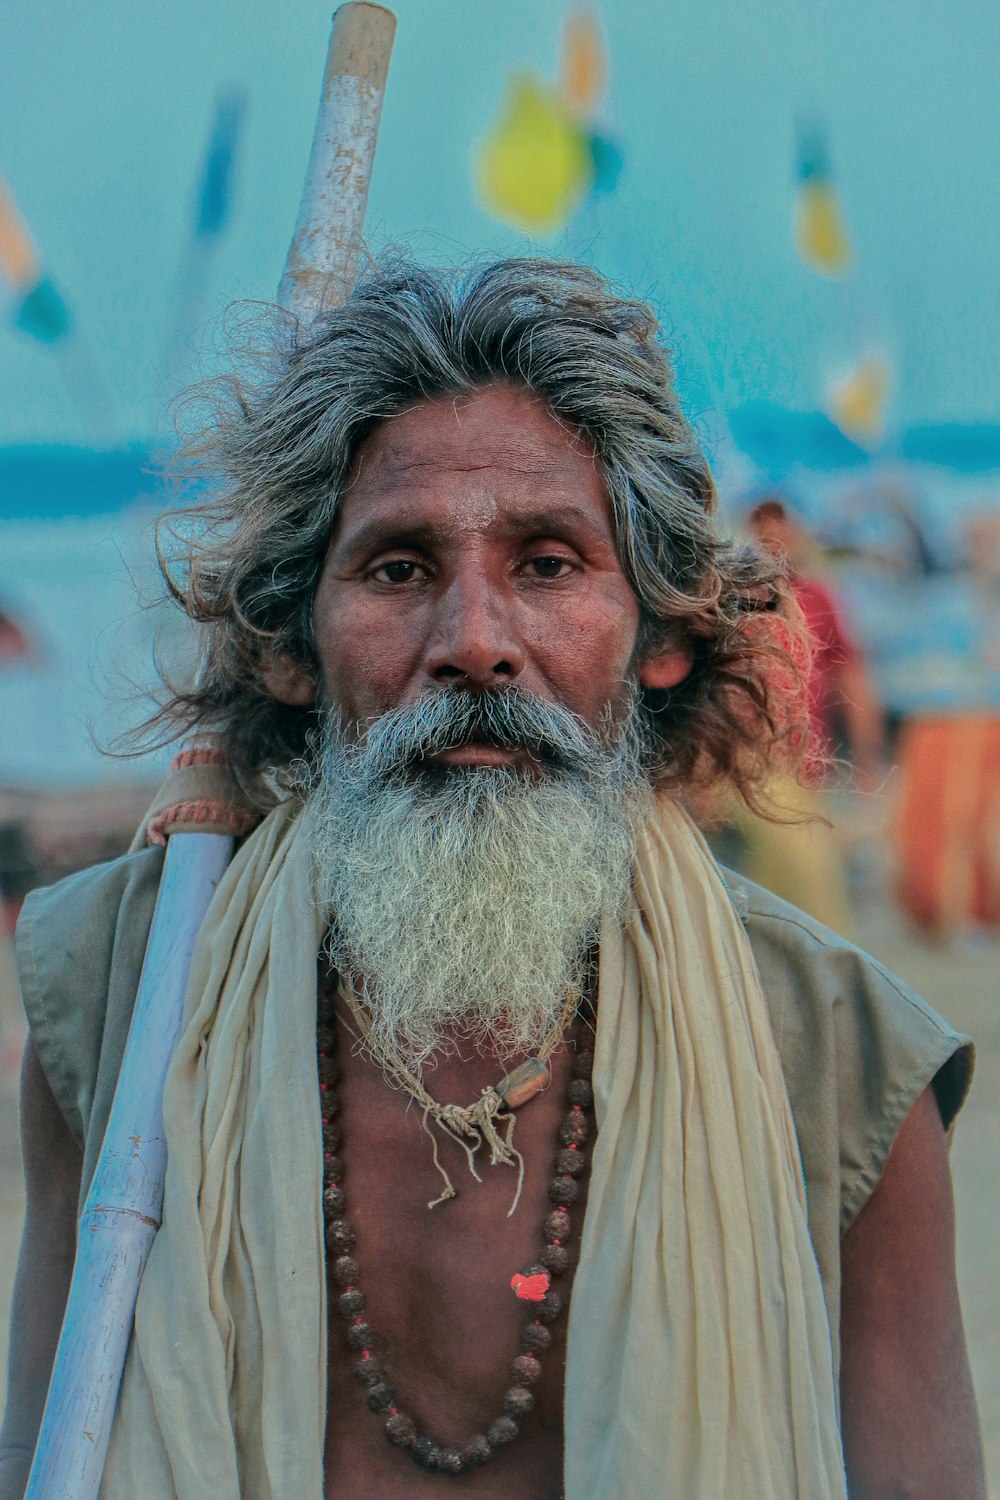 a man with a long beard holding a baseball bat photo – Free Prayagraj Image  on Unsplash